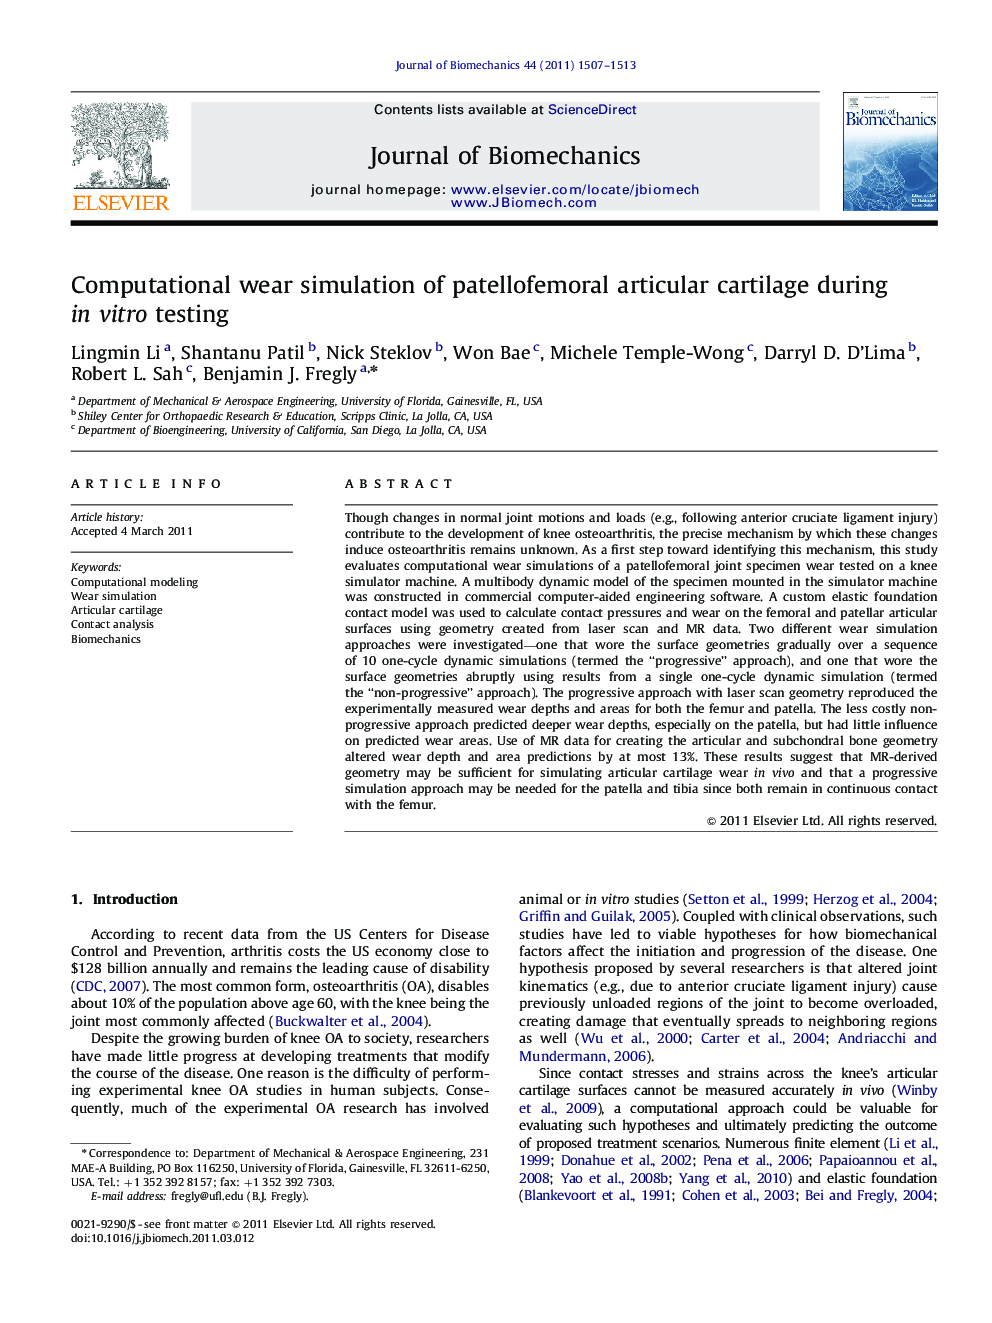 Computational wear simulation of patellofemoral articular cartilage during in vitro testing